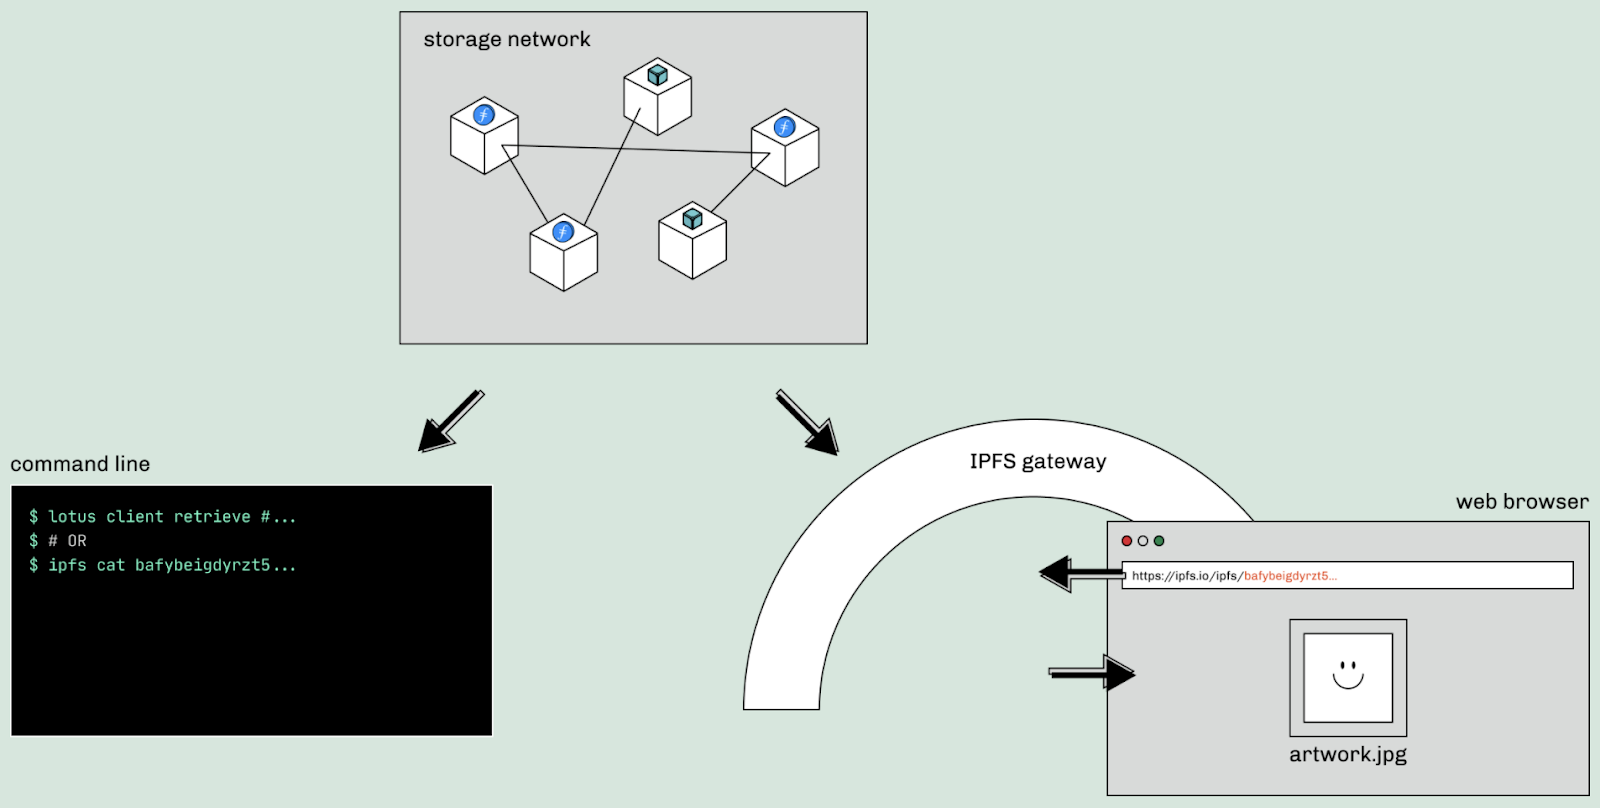 Diagram of storage network